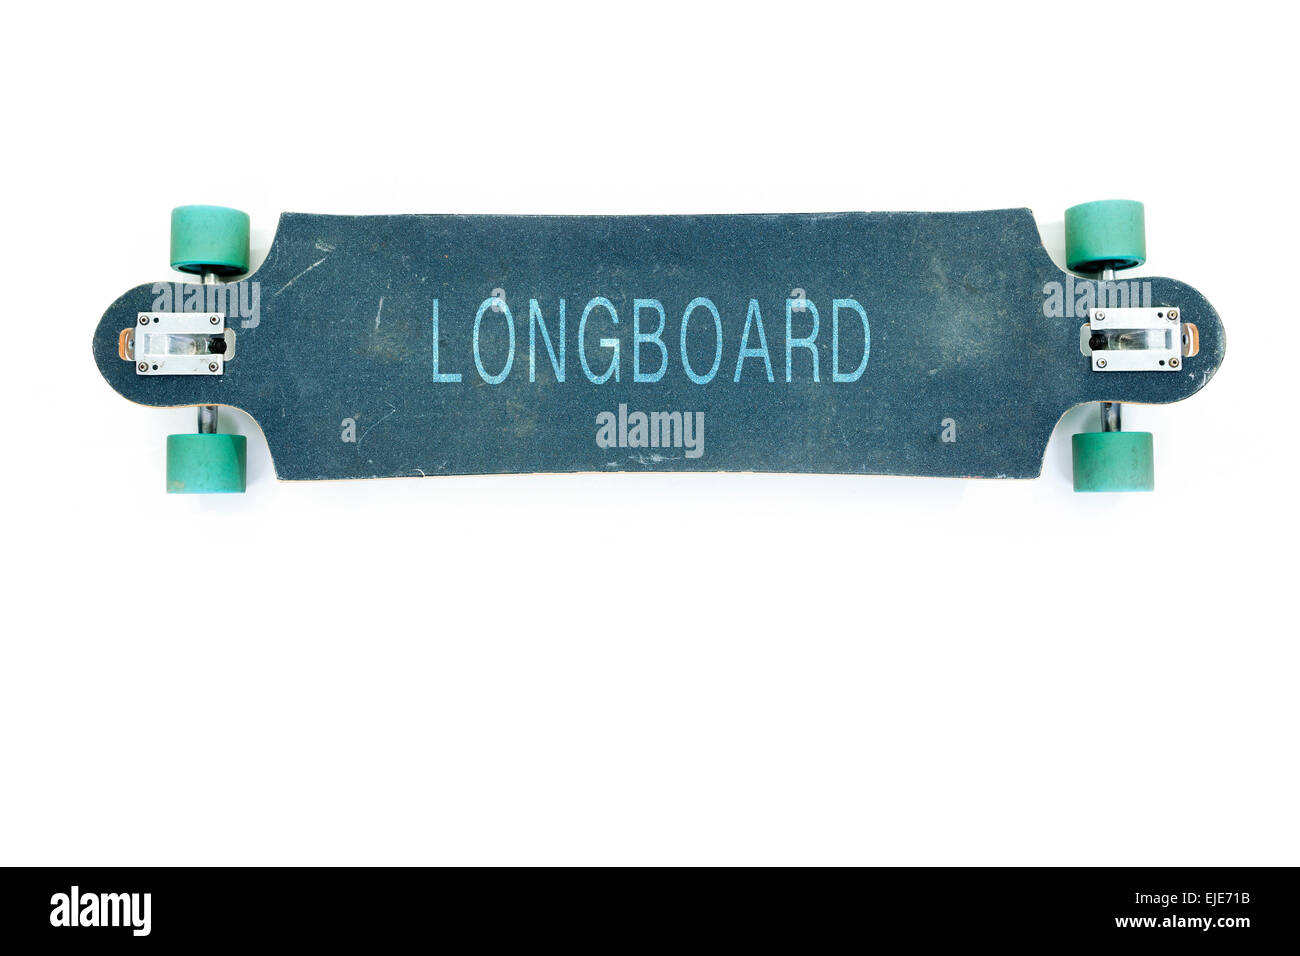 Longboard skateboard set isolated on a white background. Stock Photo